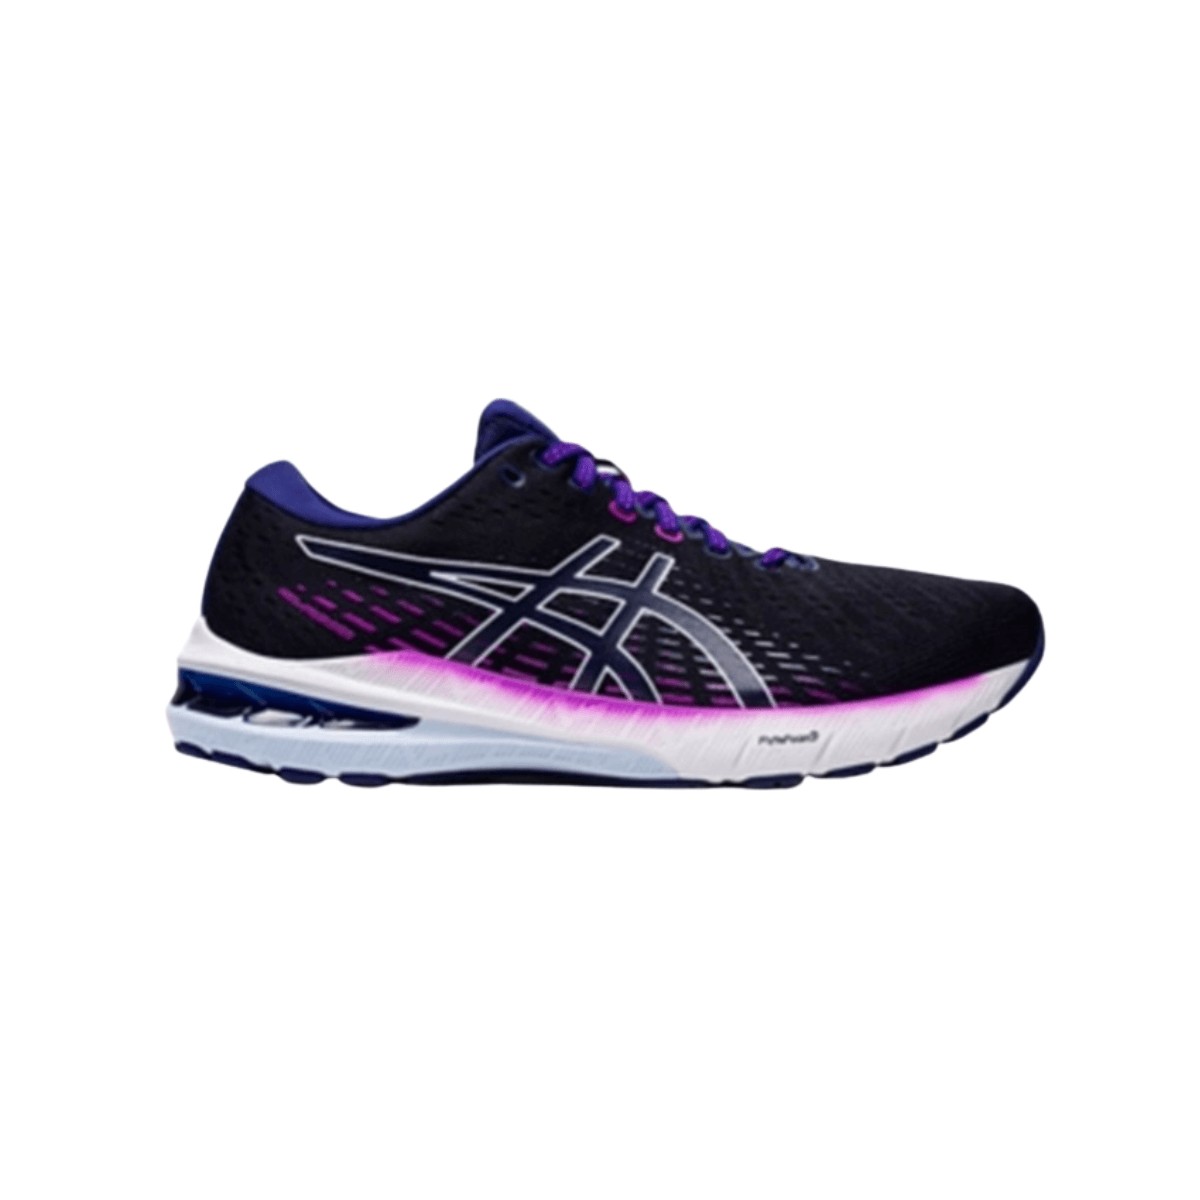 Asics Gel Pursue 8 Black Purple Women AW22 Running Shoes, Size 38 - EUR